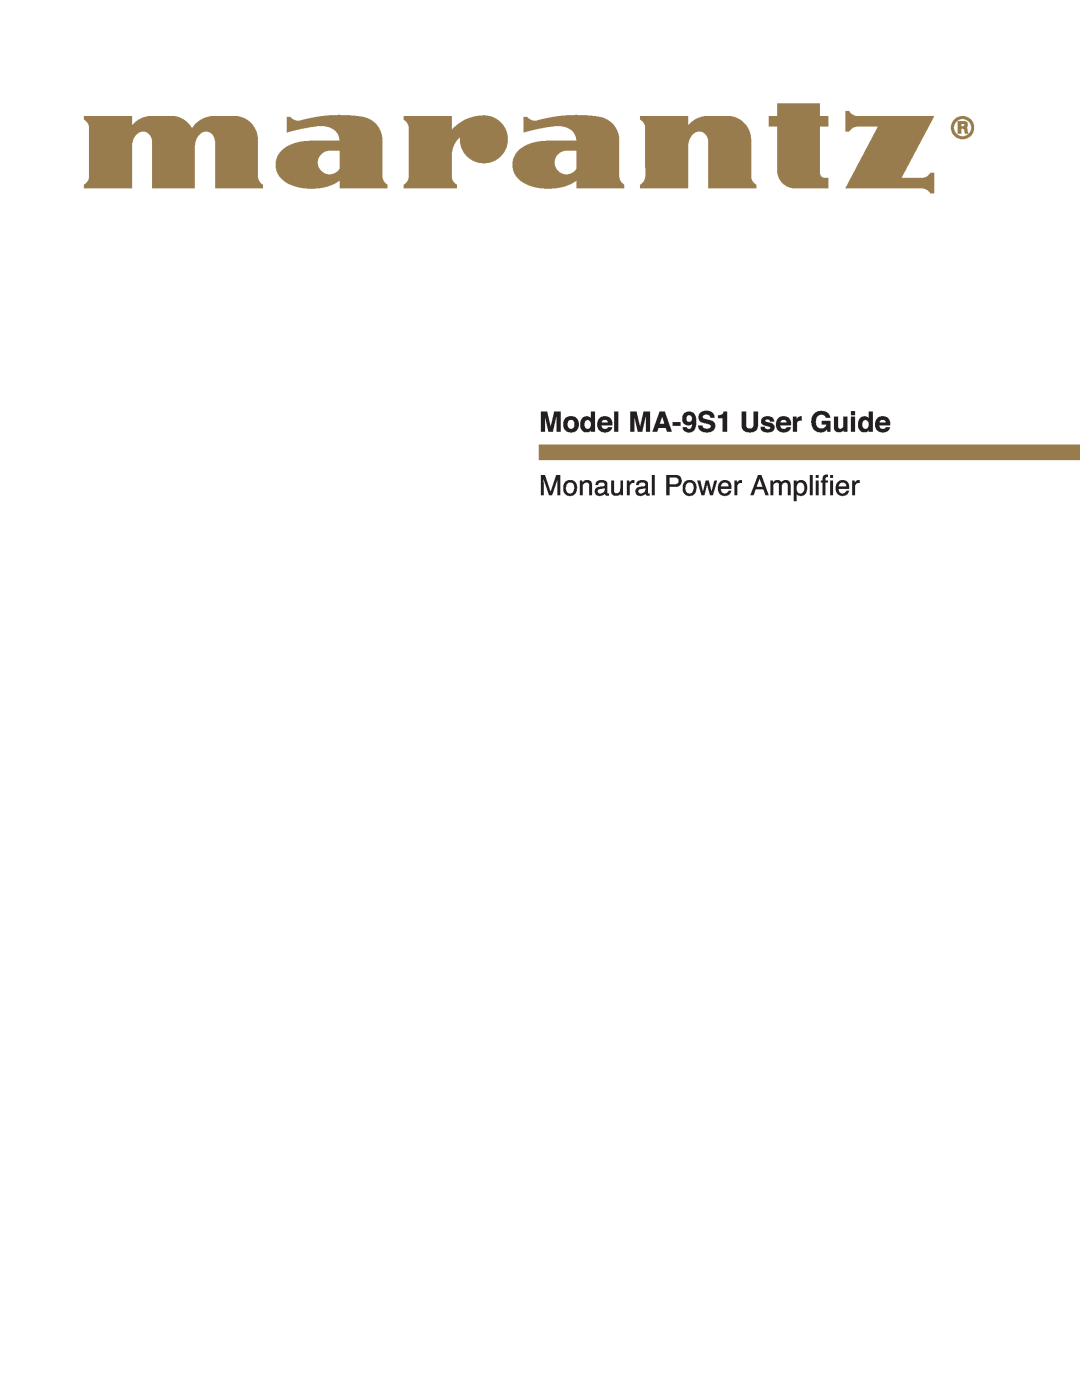 Marantz manual Model MA-9S1User Guide, Monaural Power Amplifier 